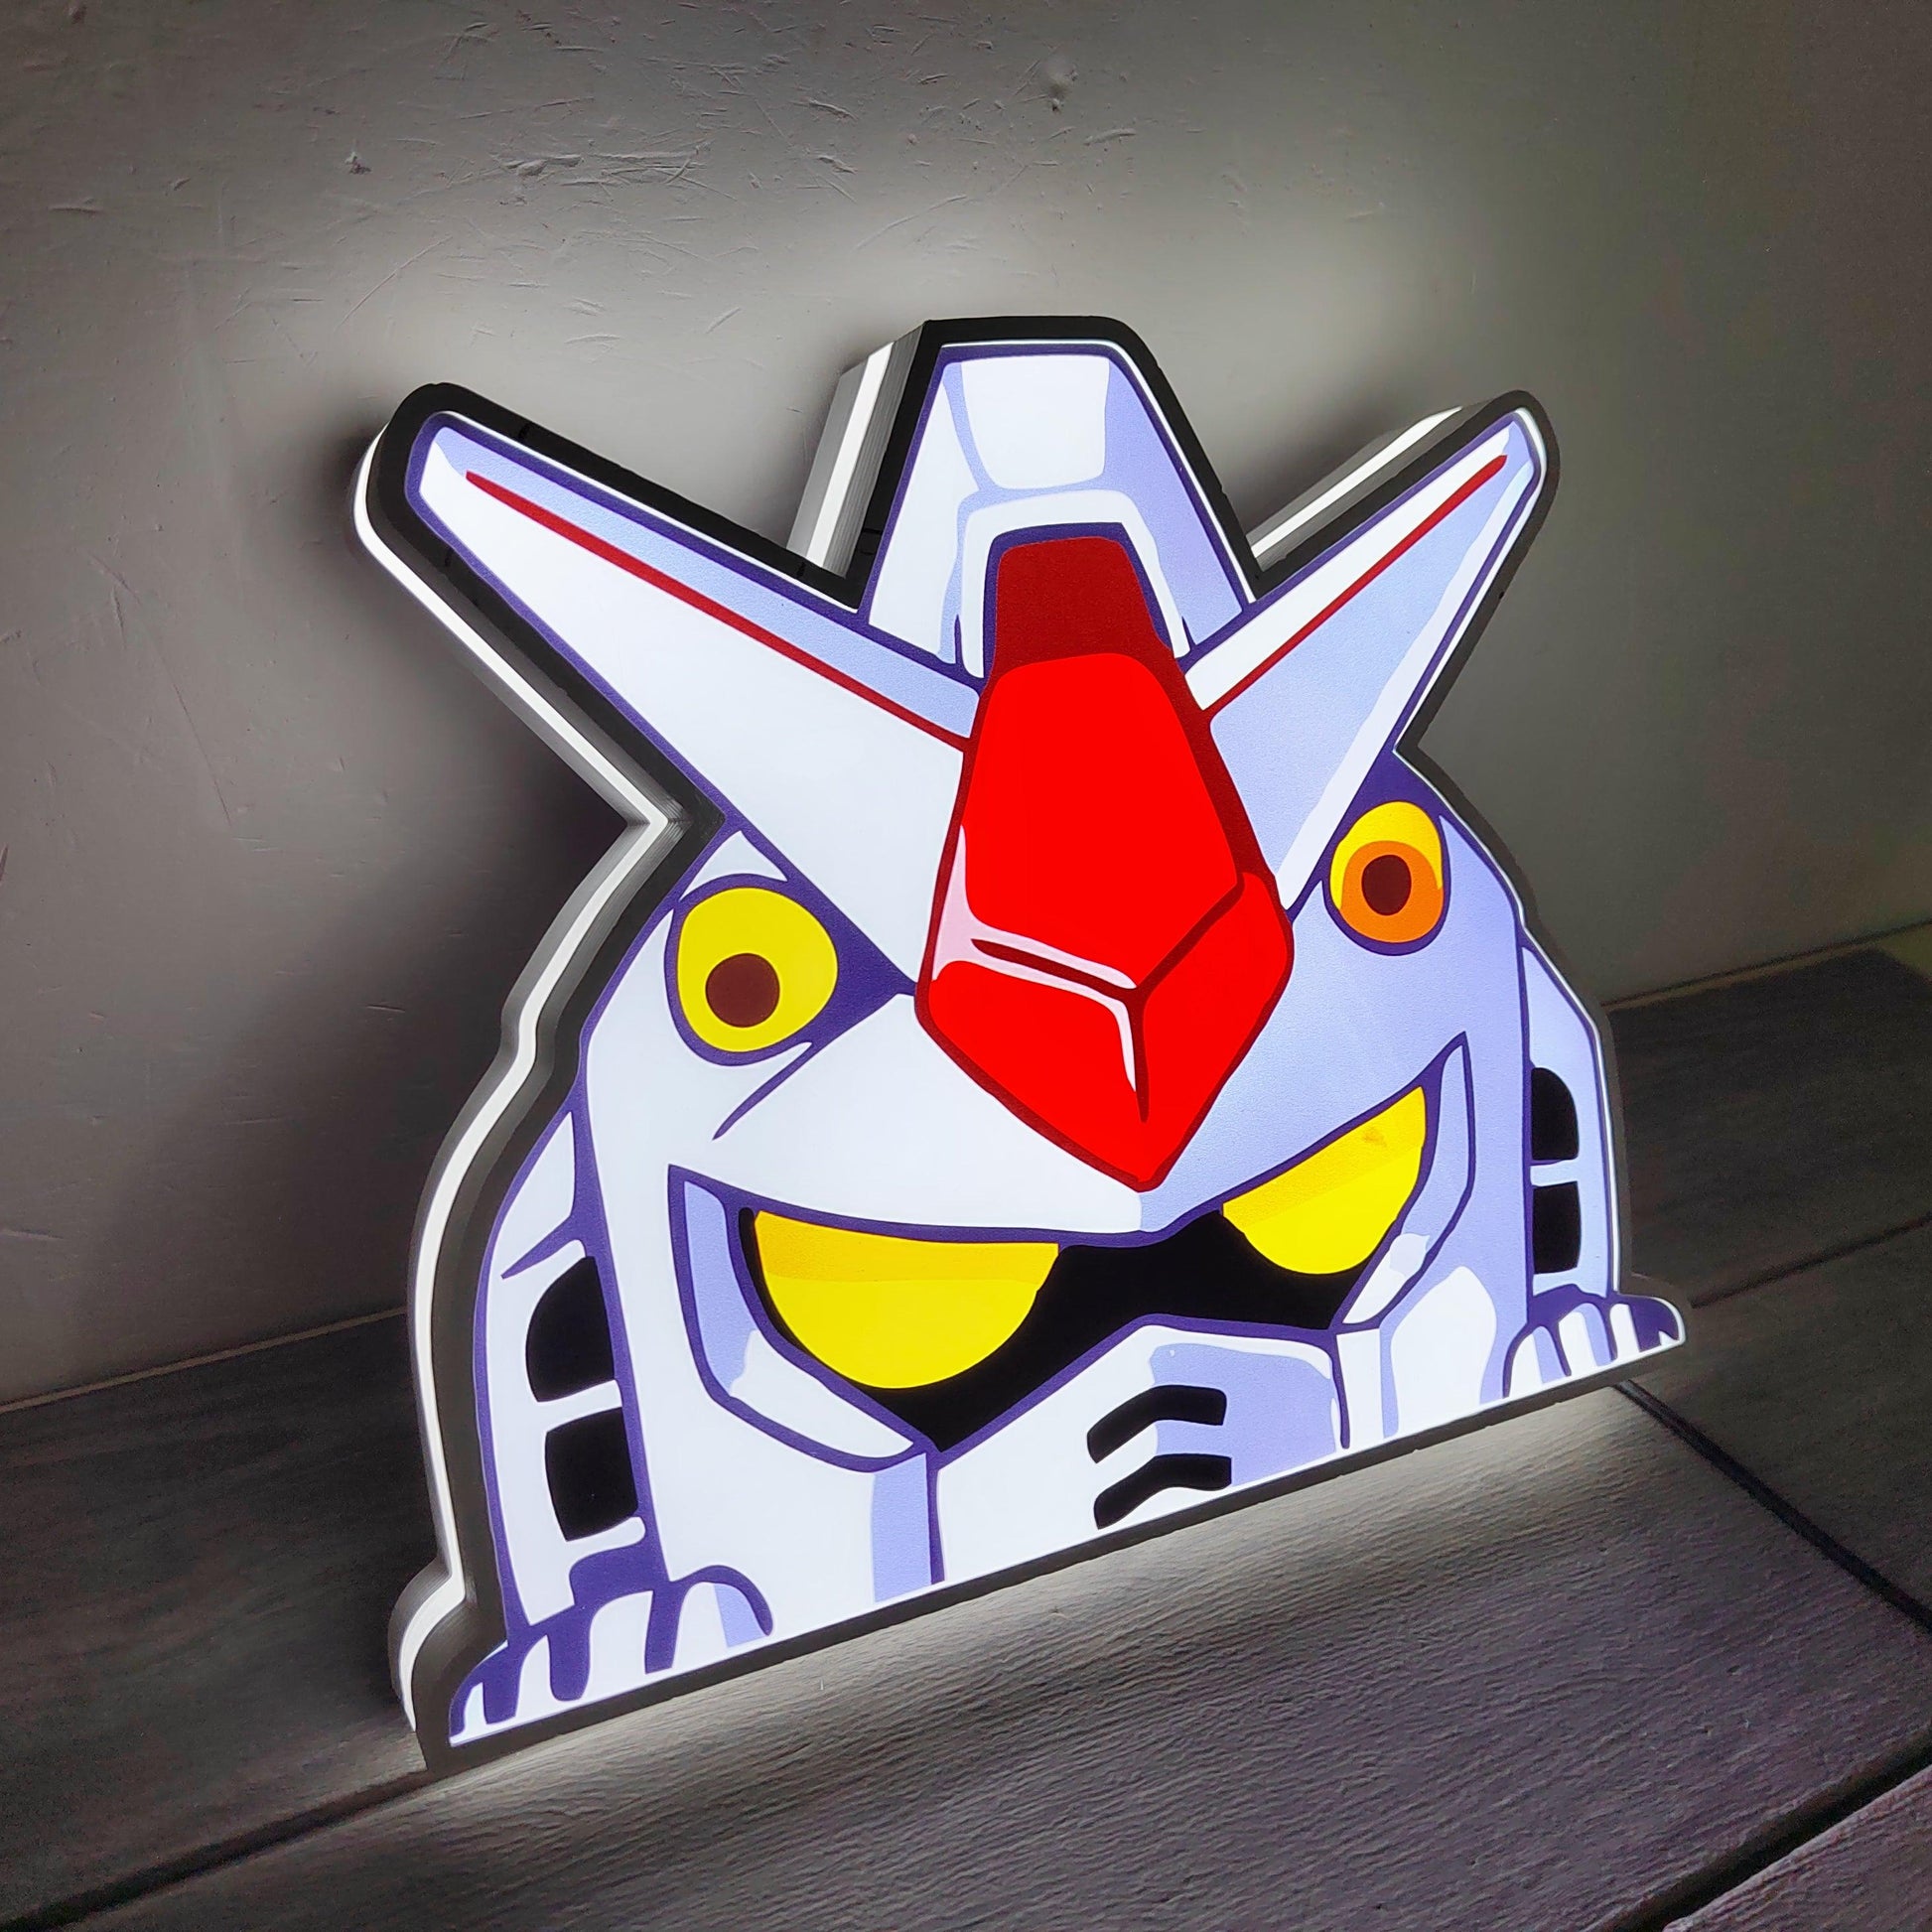 Mobile Suit Gundam Logo LED Nightlight Gift 3D Print Desktop Lightbox Illuminated Gaming Room Sign - FYLZGO Signs